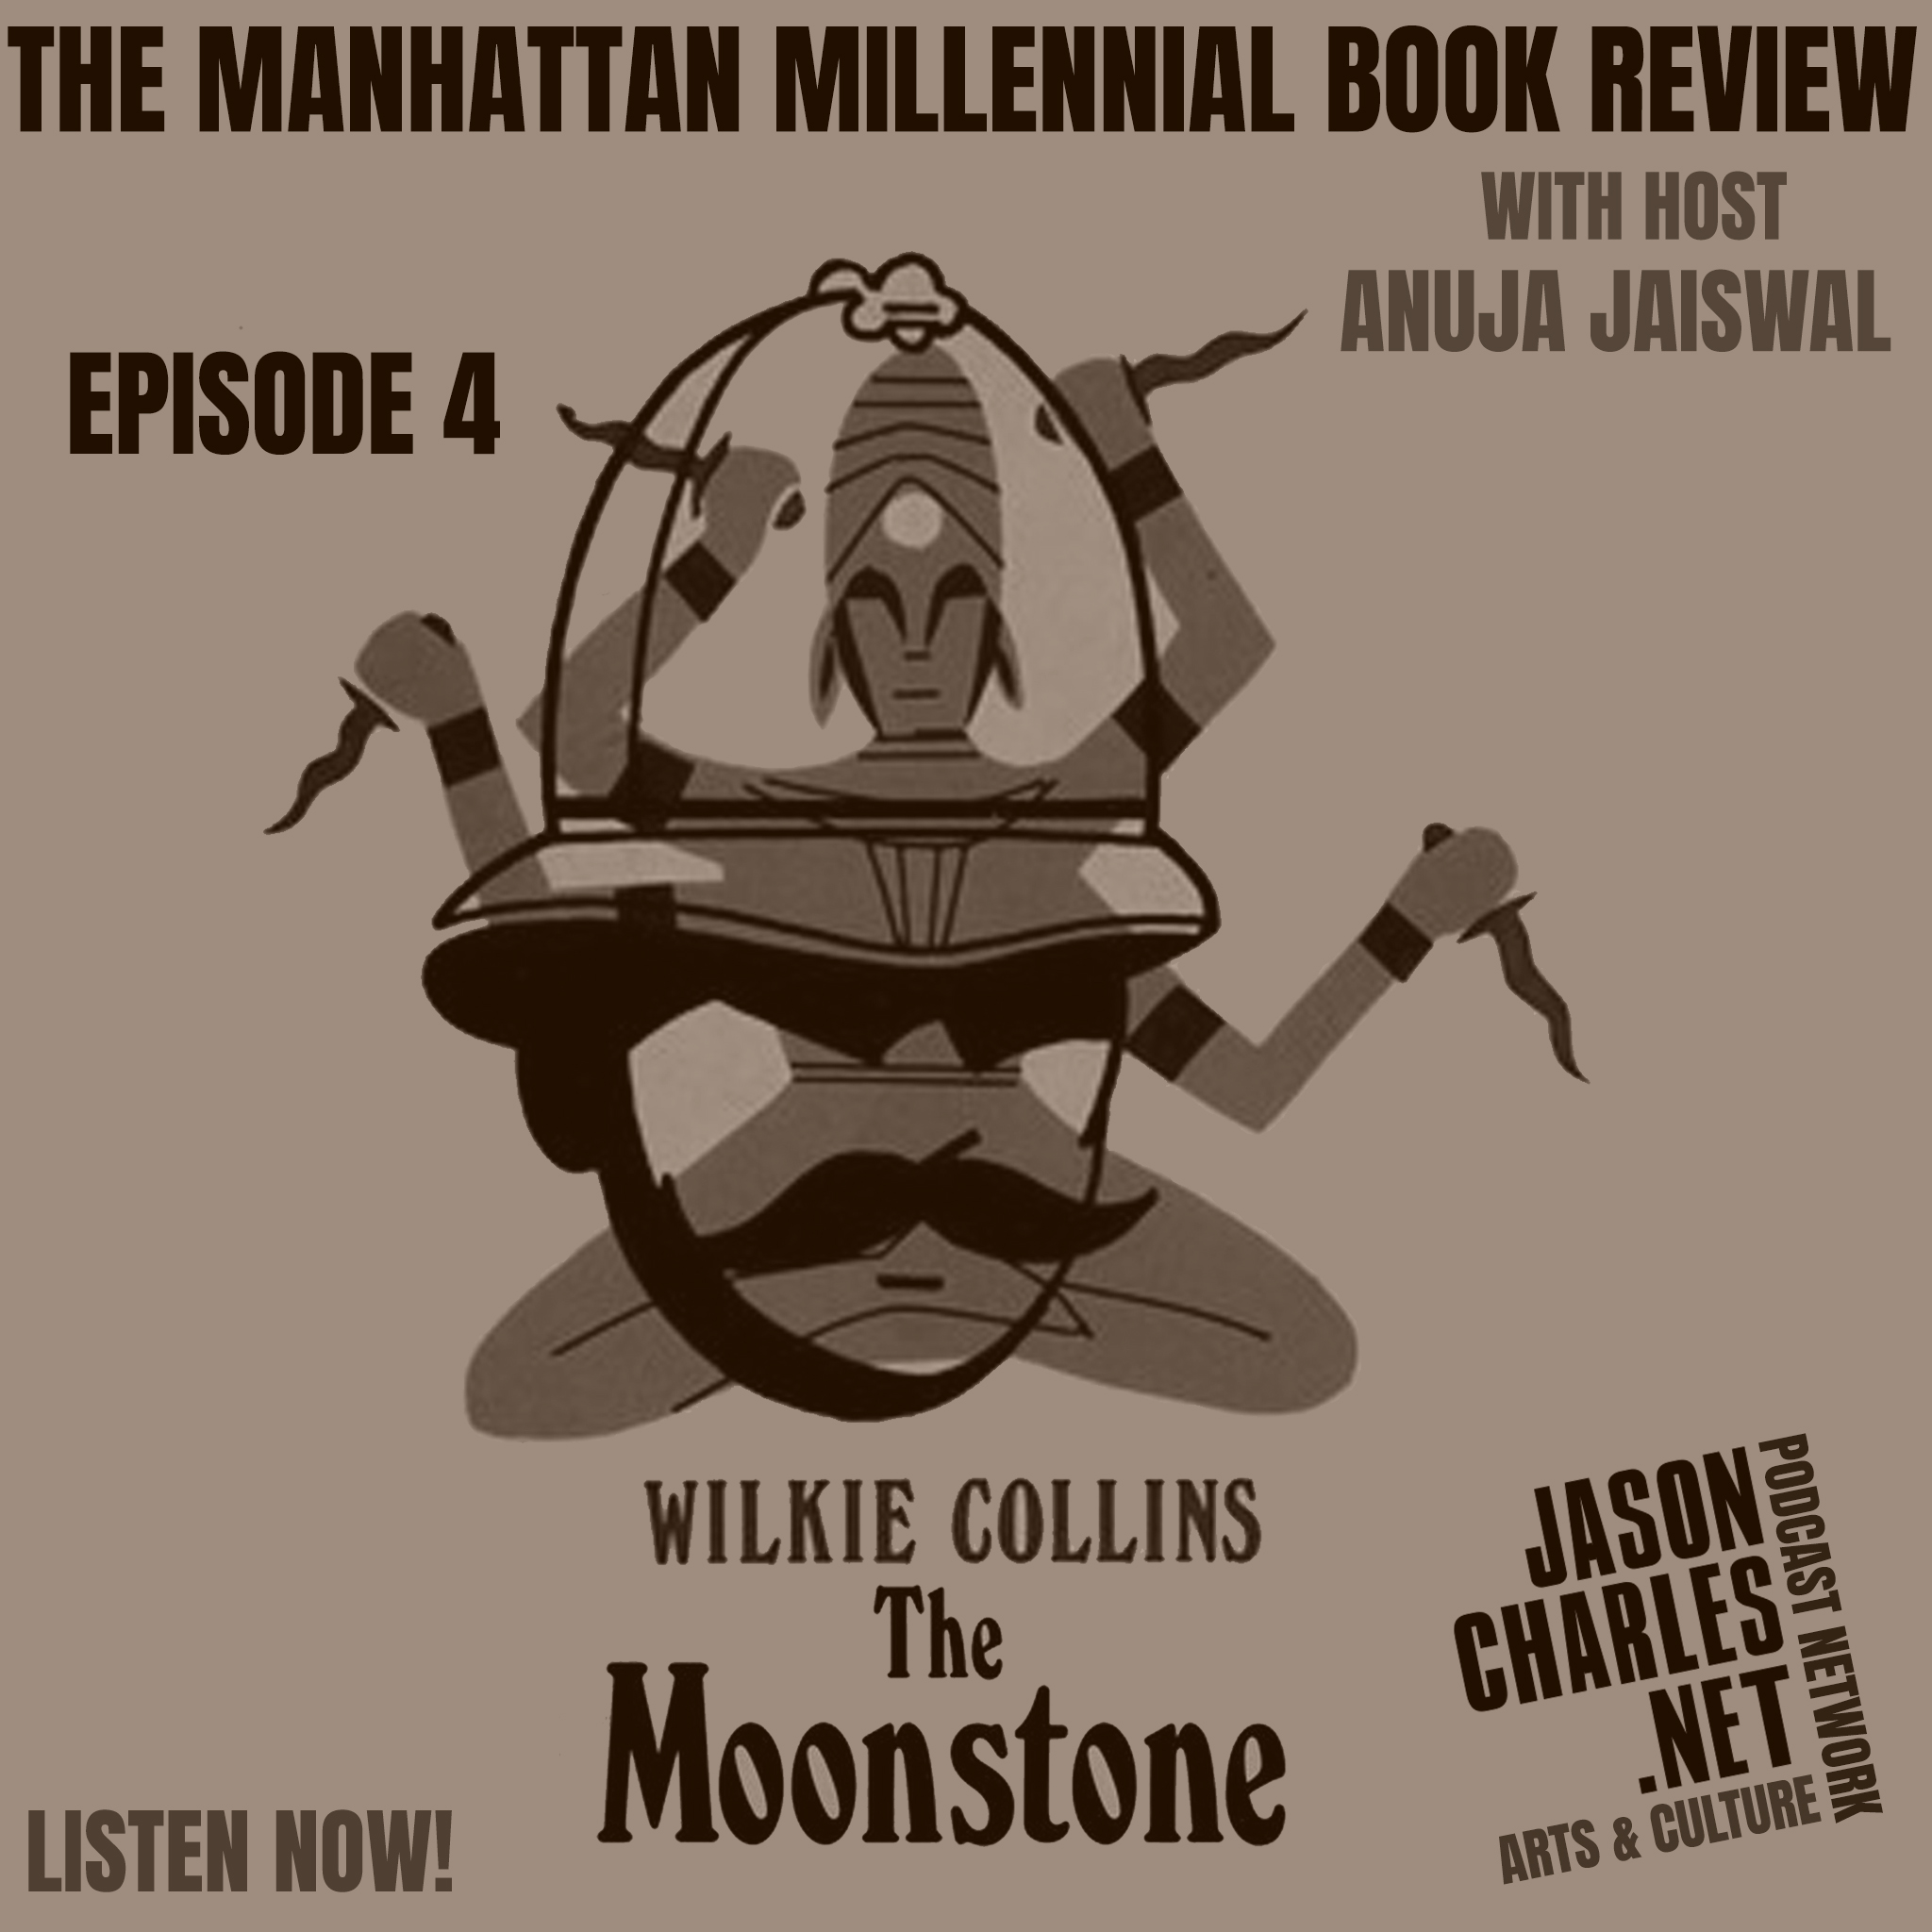 THE MANHATTAN MILLENNIAL BOOK REVIEW Episode 4 The Moonstone